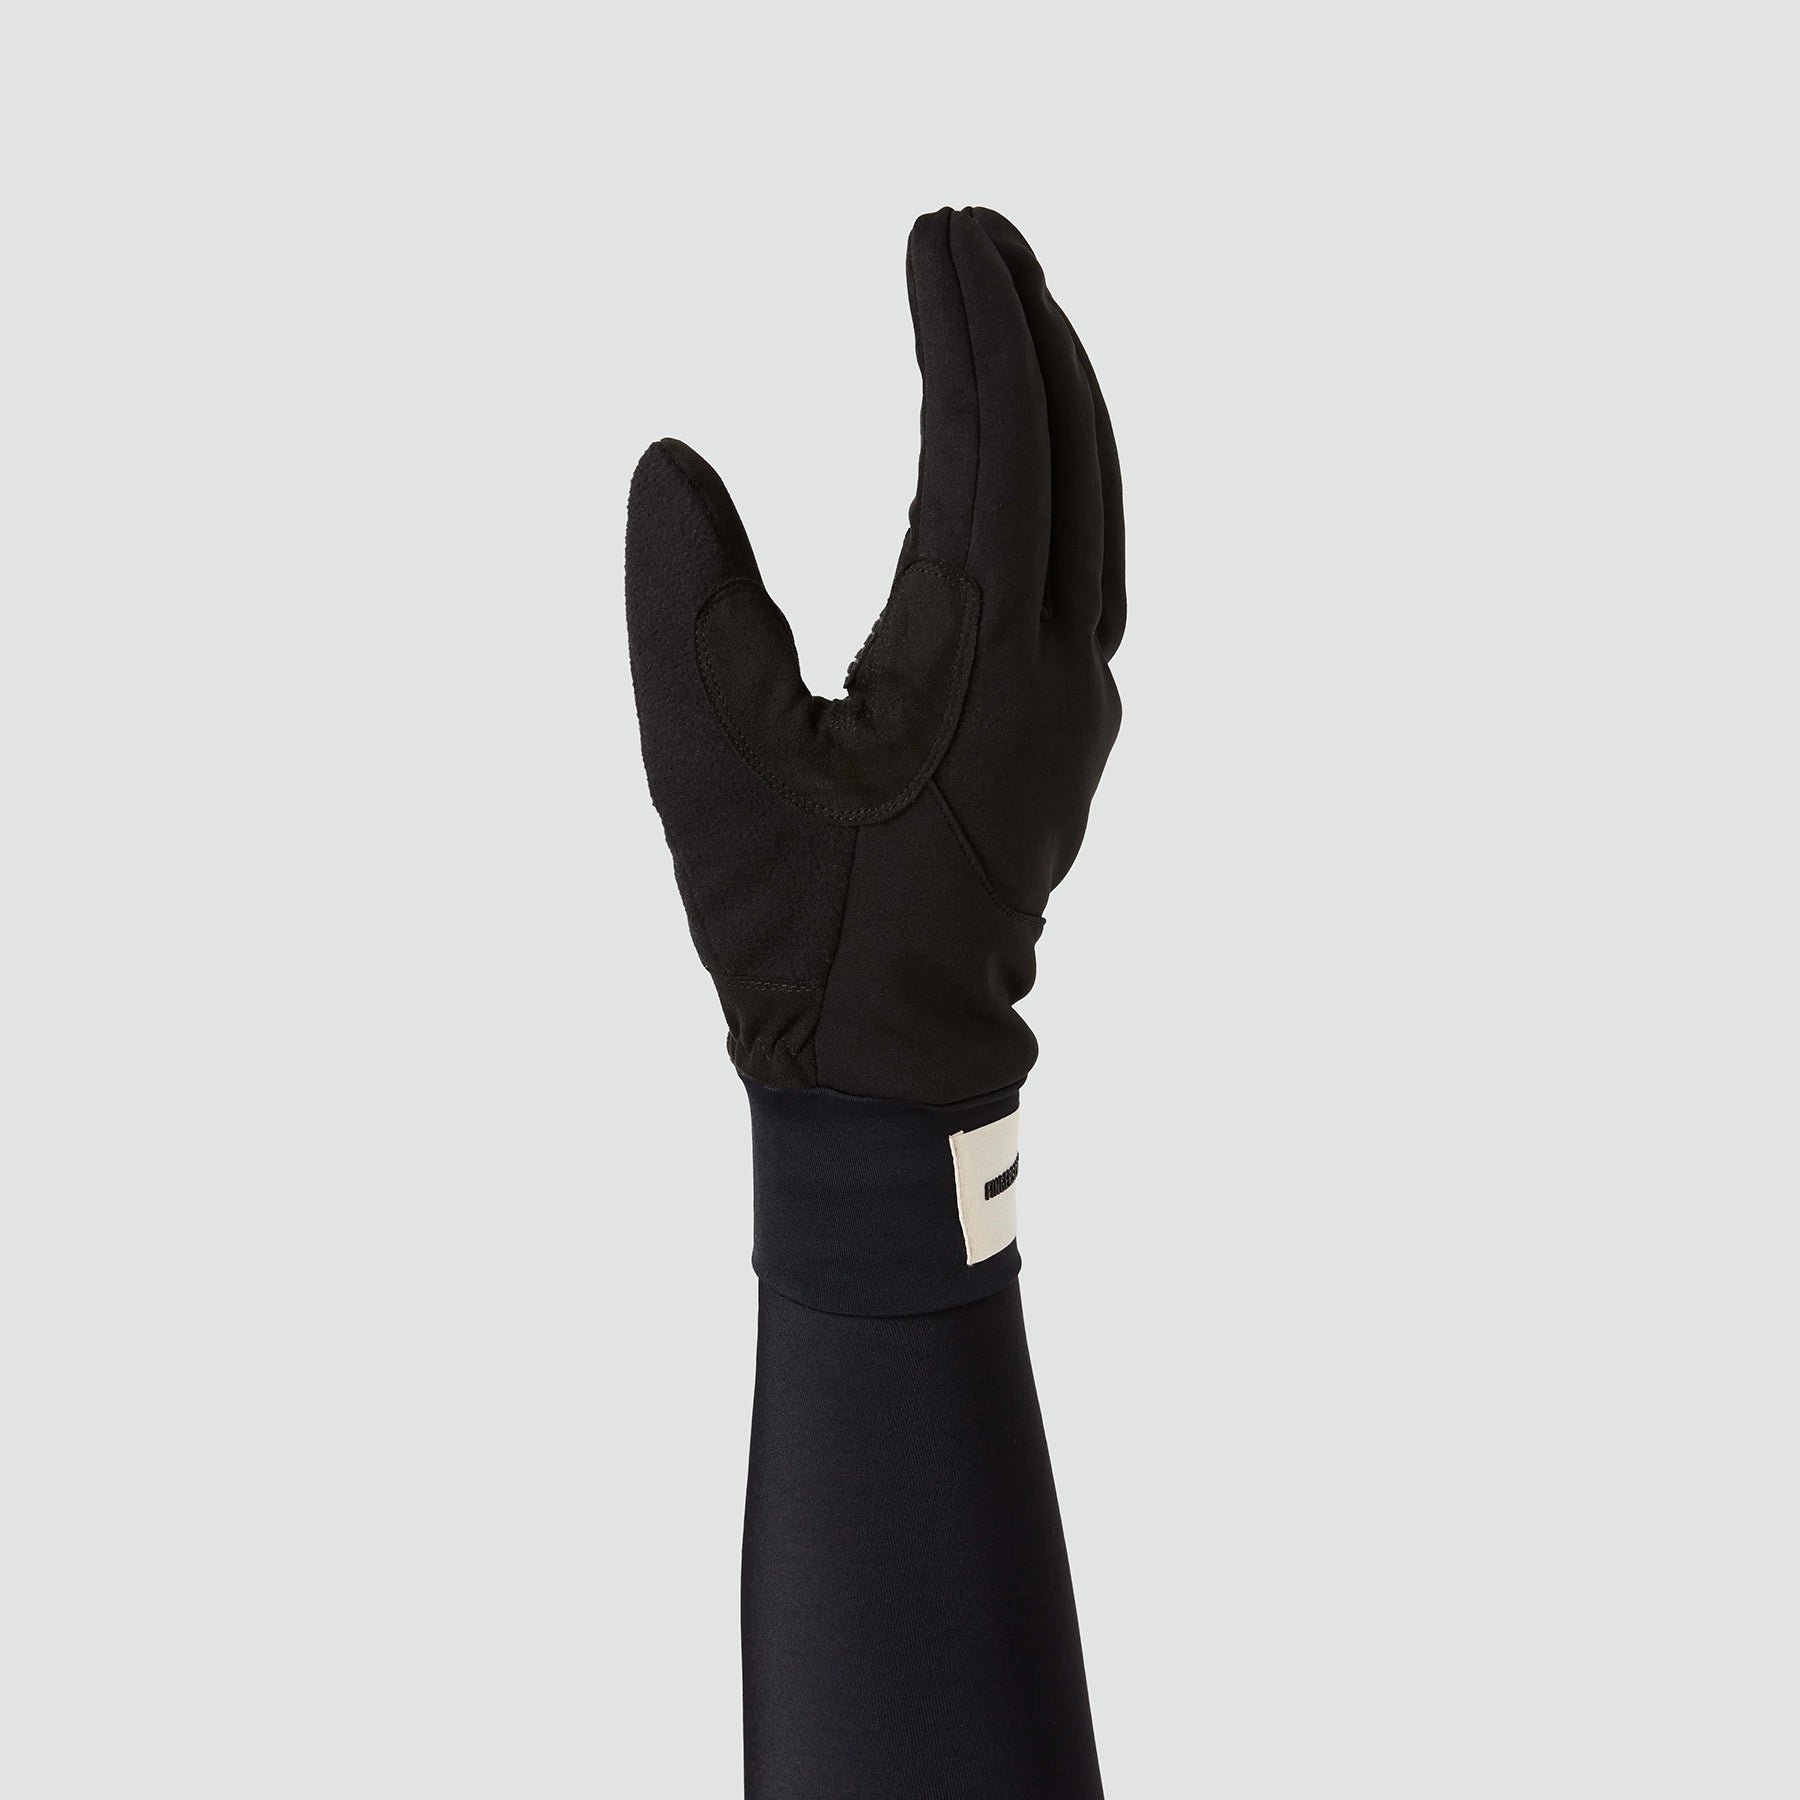 Winter Gloves - Black